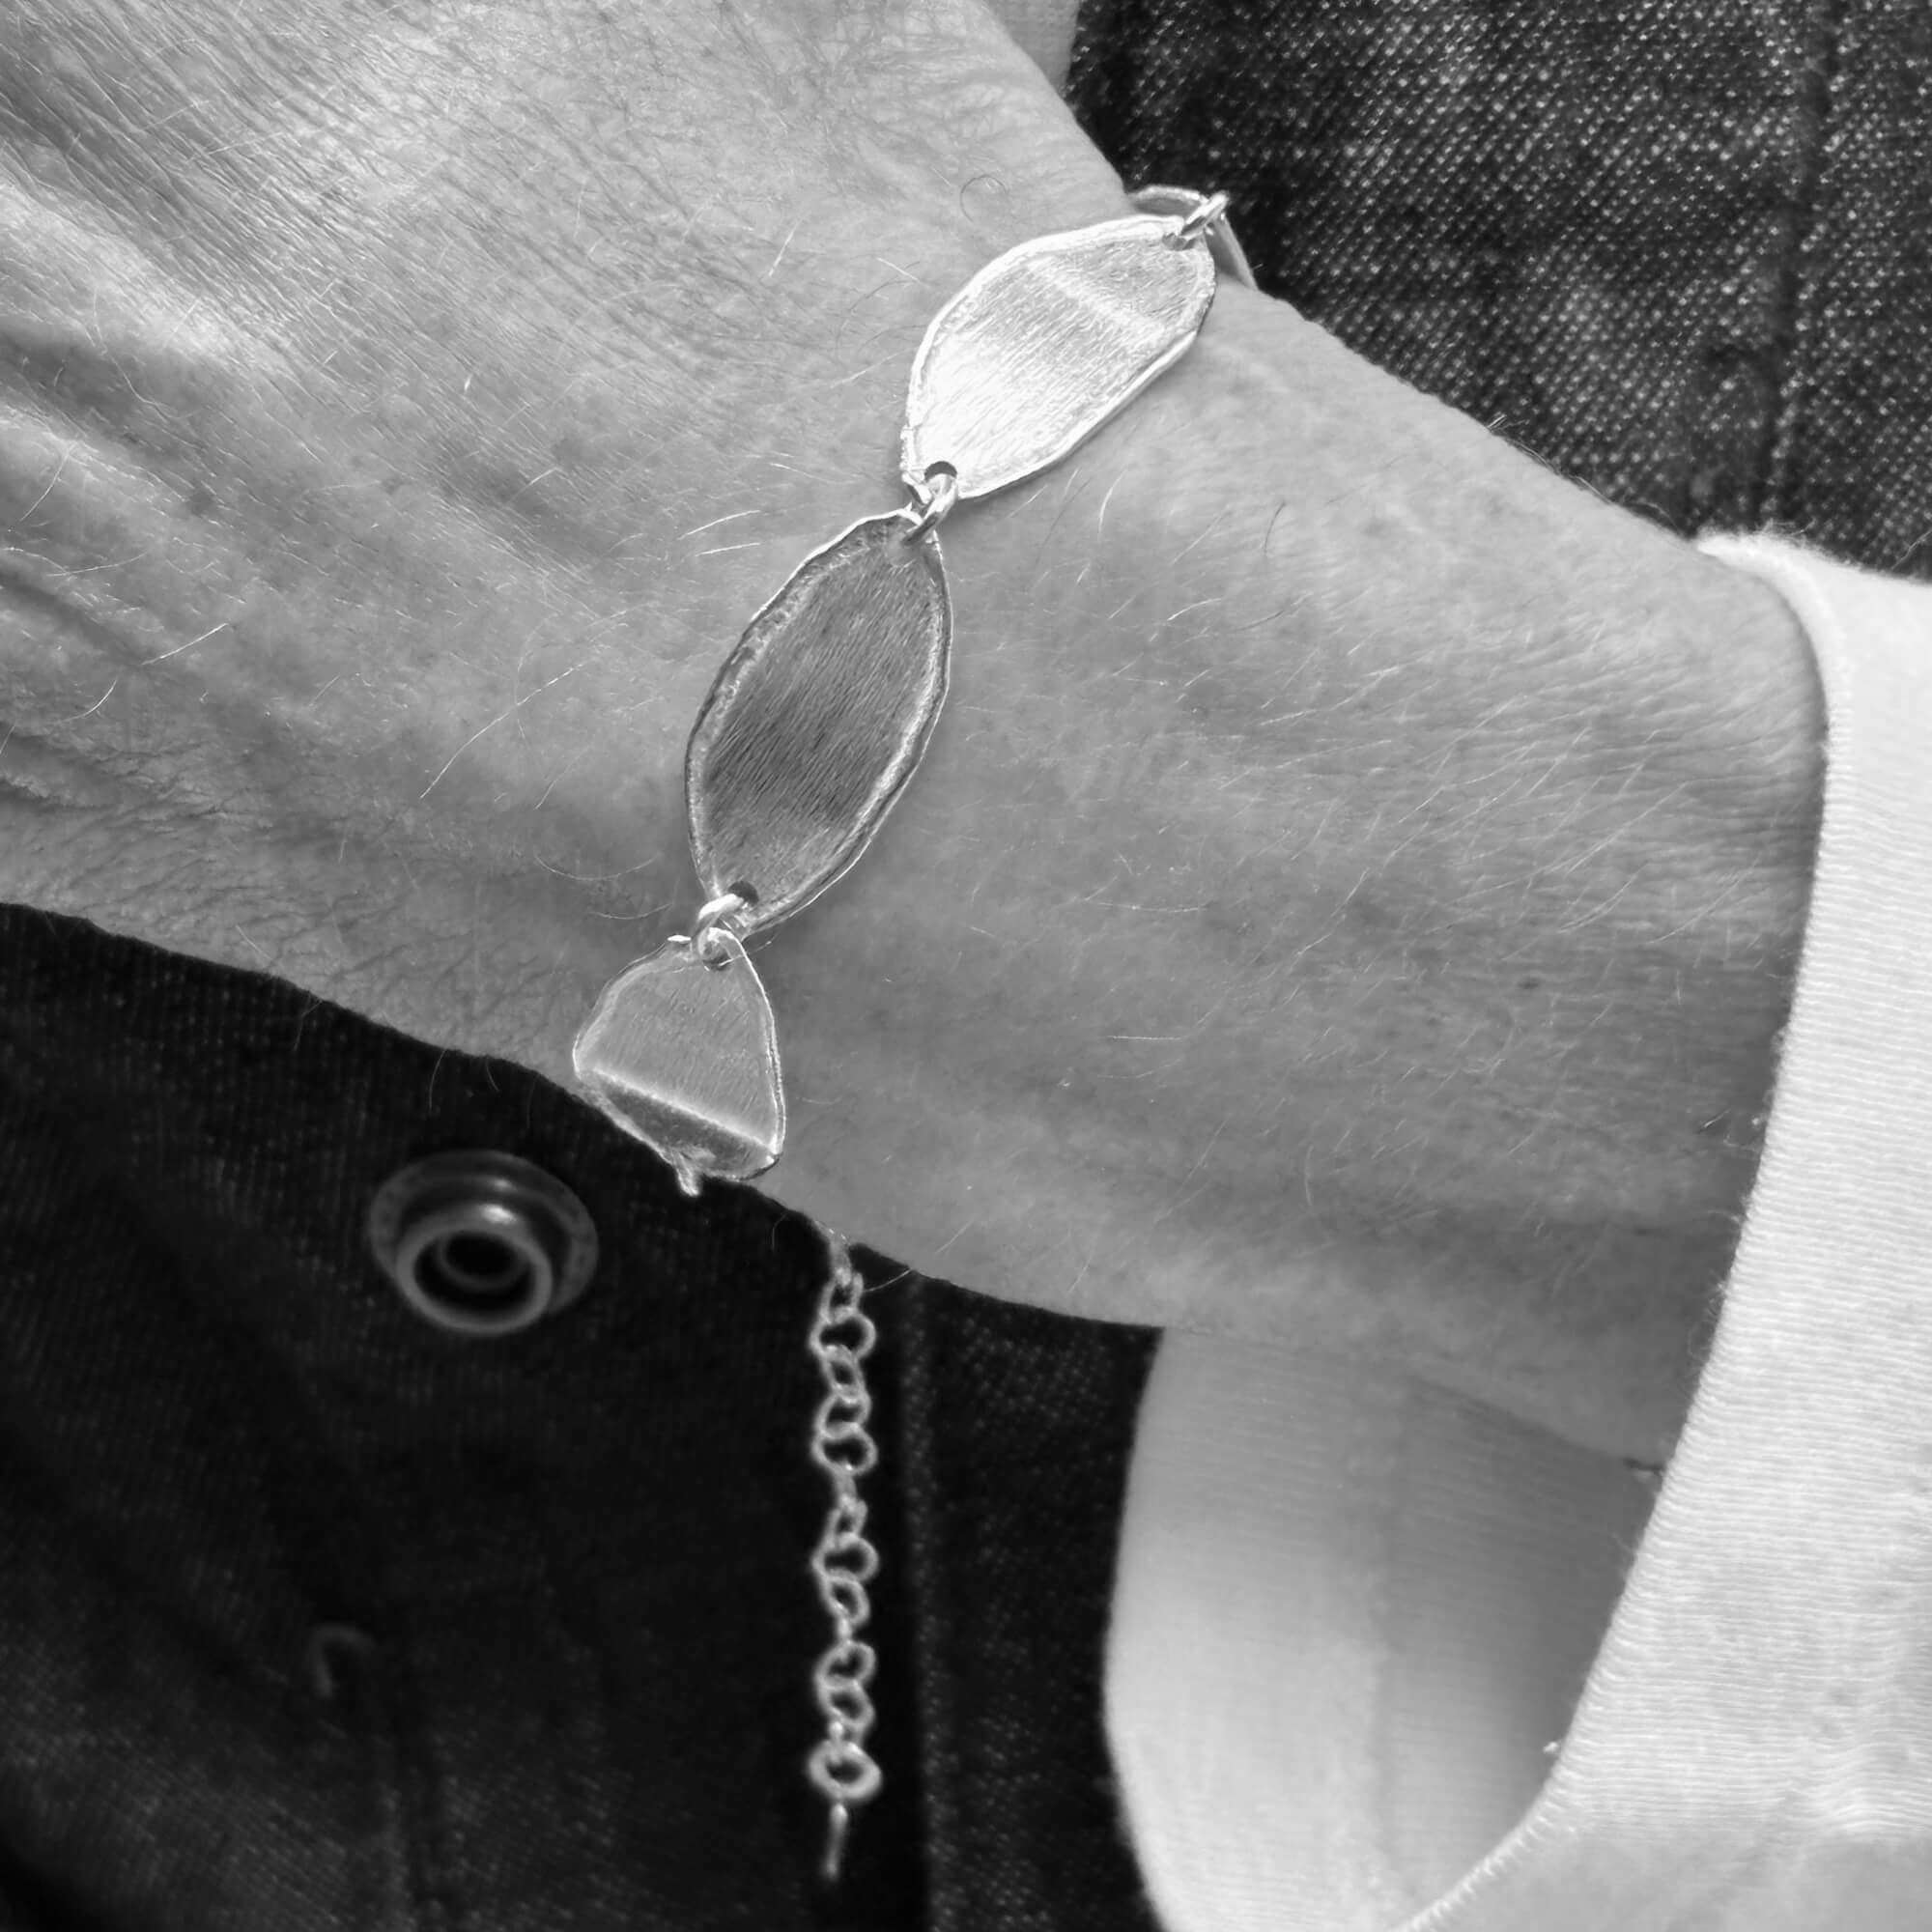 Silver and oval-shaped bracelet